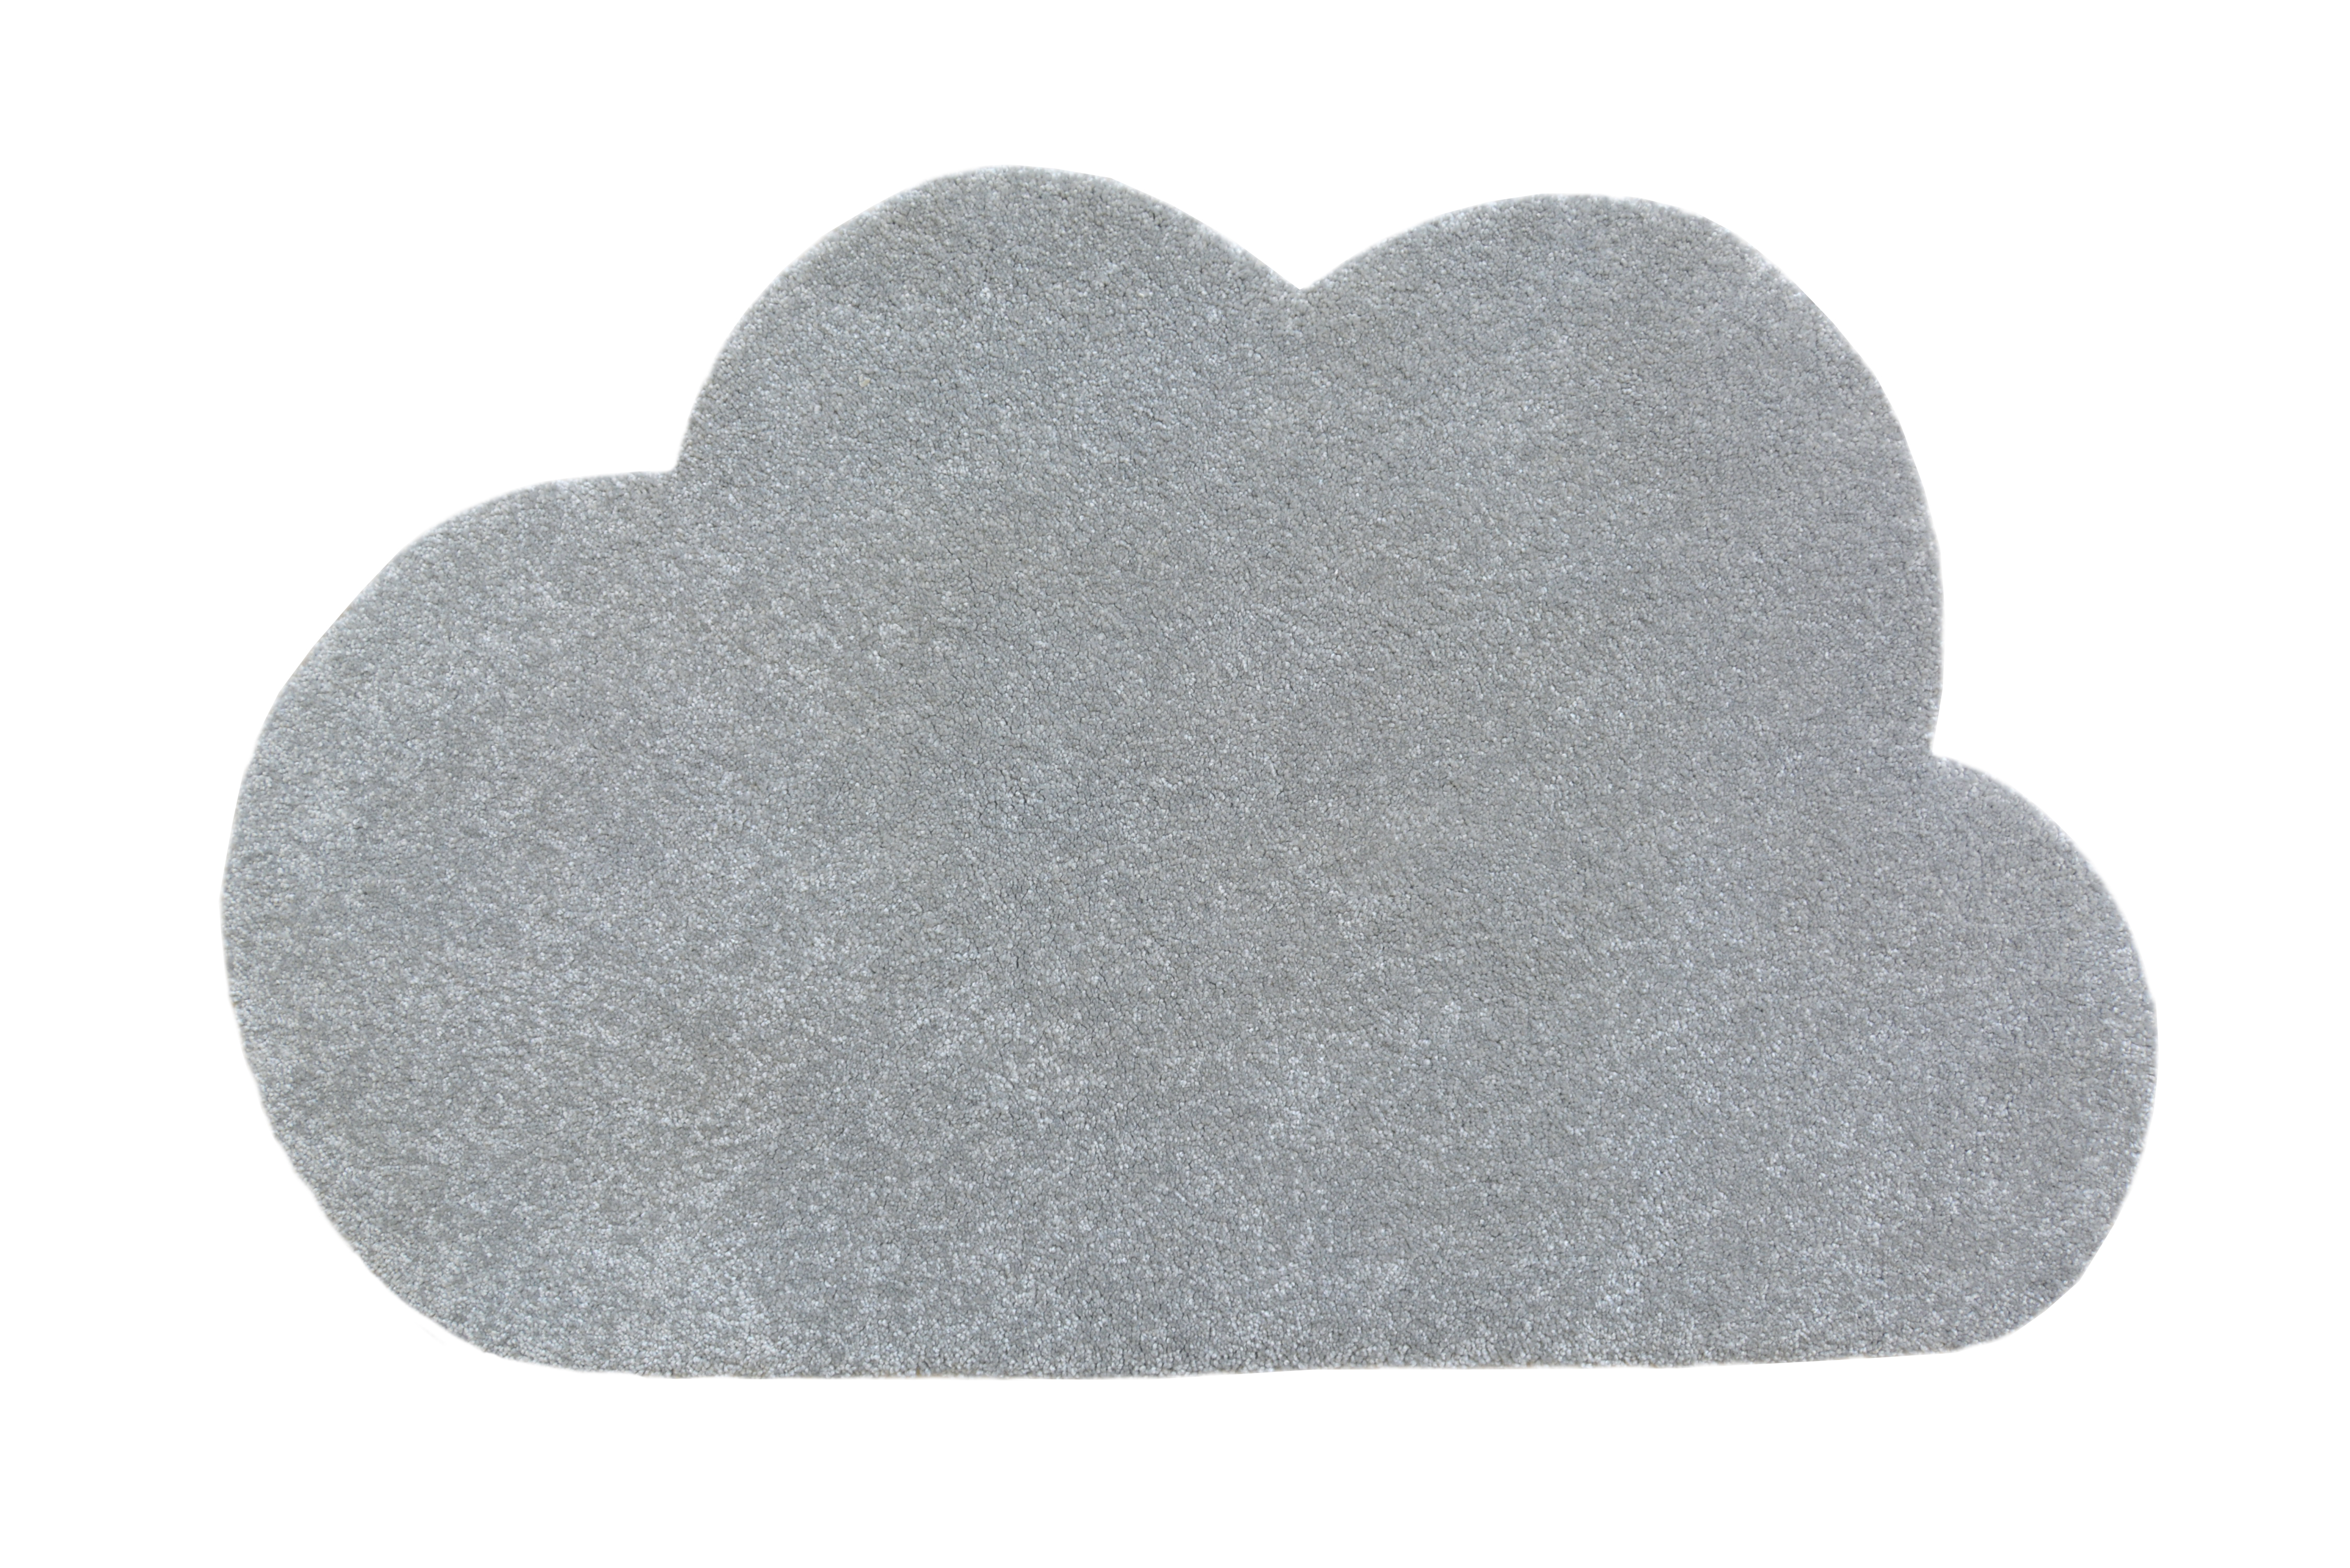 Recyclable Cloud Rug - Grey